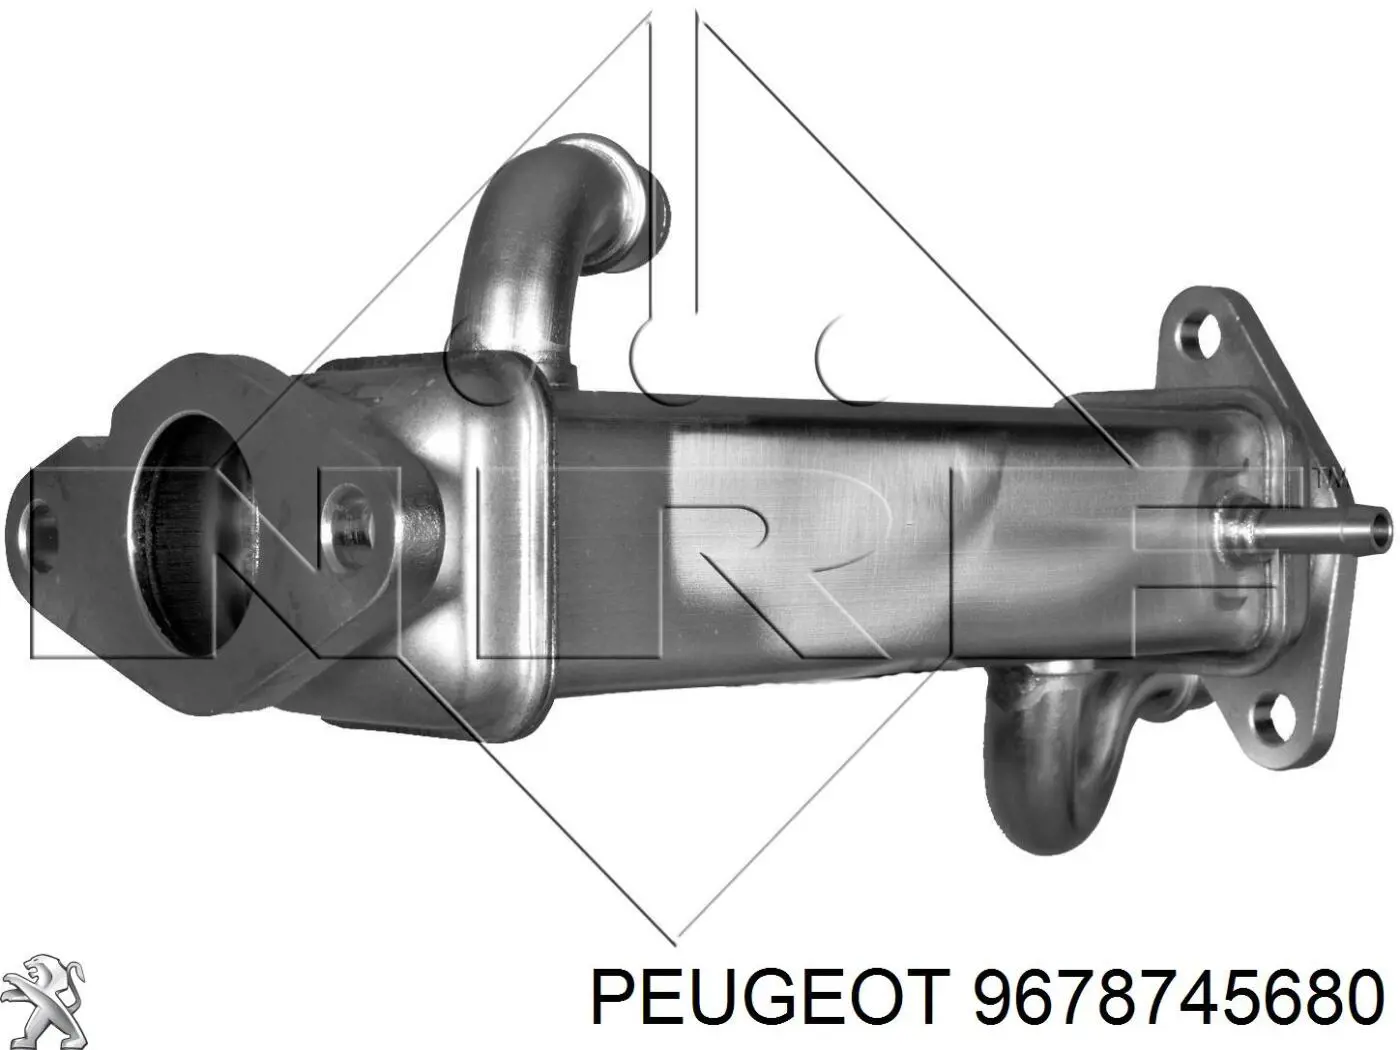 Enfriador EGR de recirculación de gases de escape 9678745680 Peugeot/Citroen